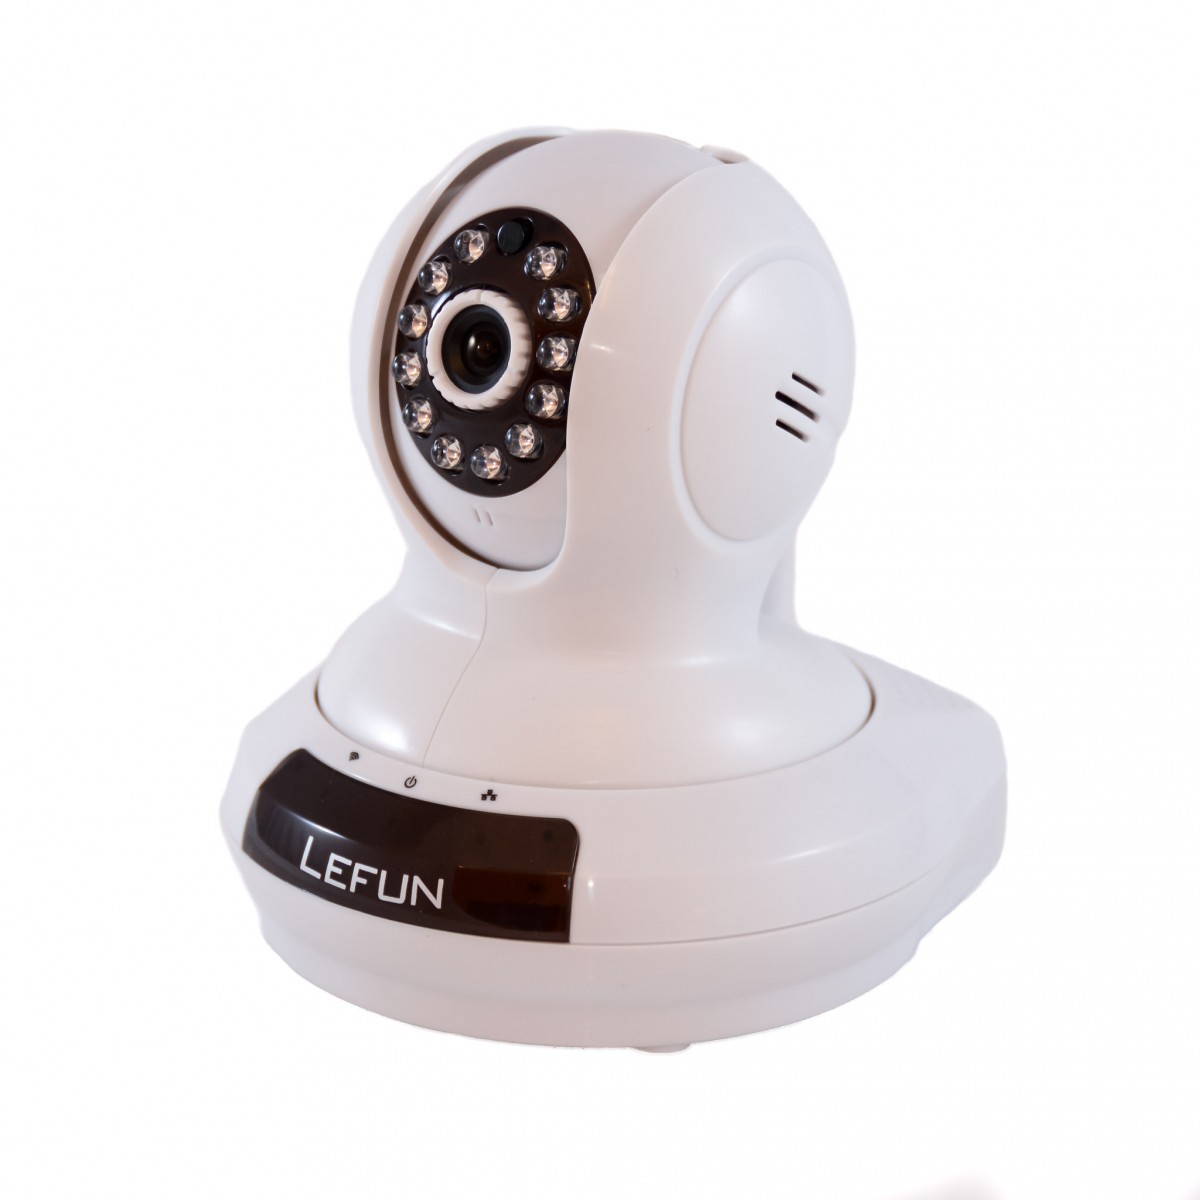 lefun c2 720p wifi video monitor review